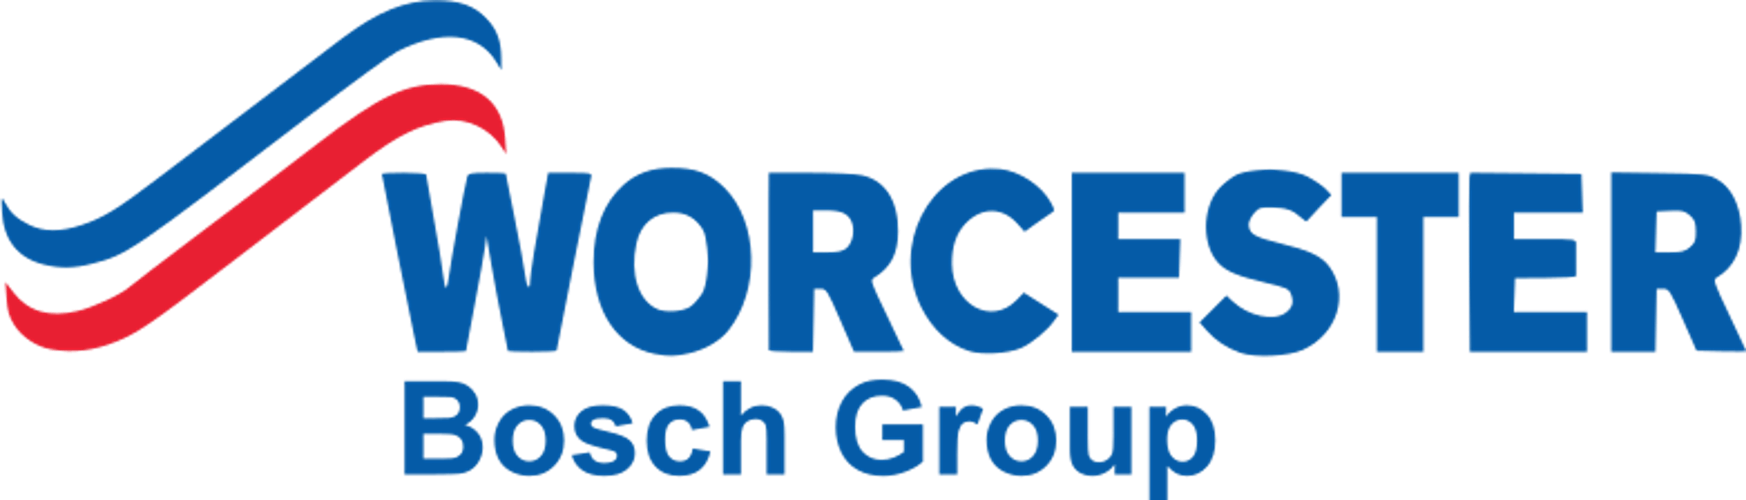 Worcester Bosch group